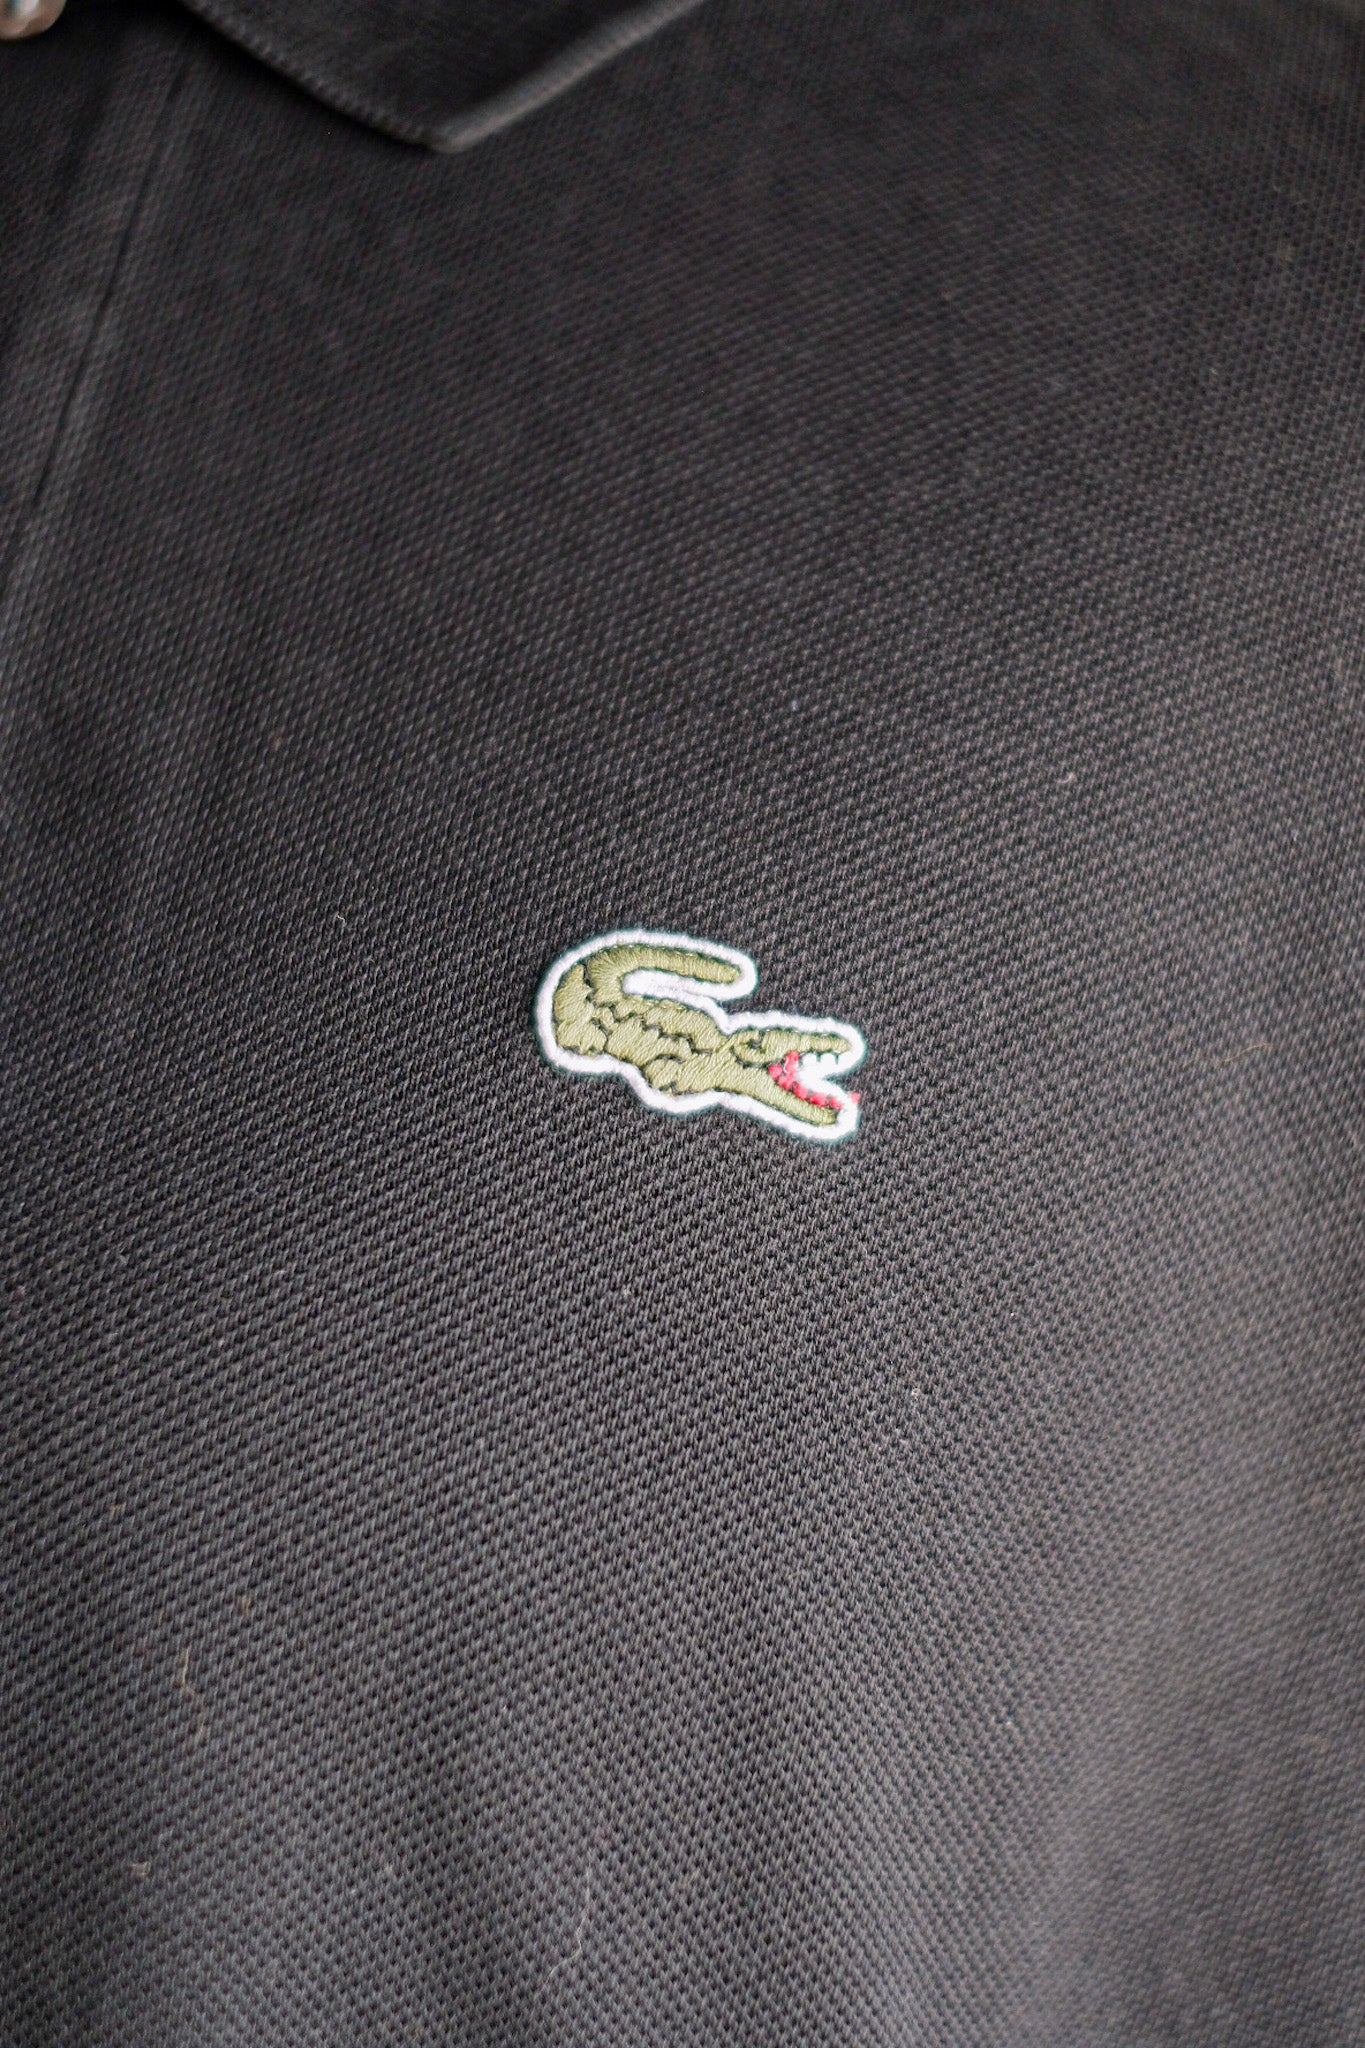 [~ 80's] Chemise Lacoste S/S Polo Shirt Size.5 "Black"